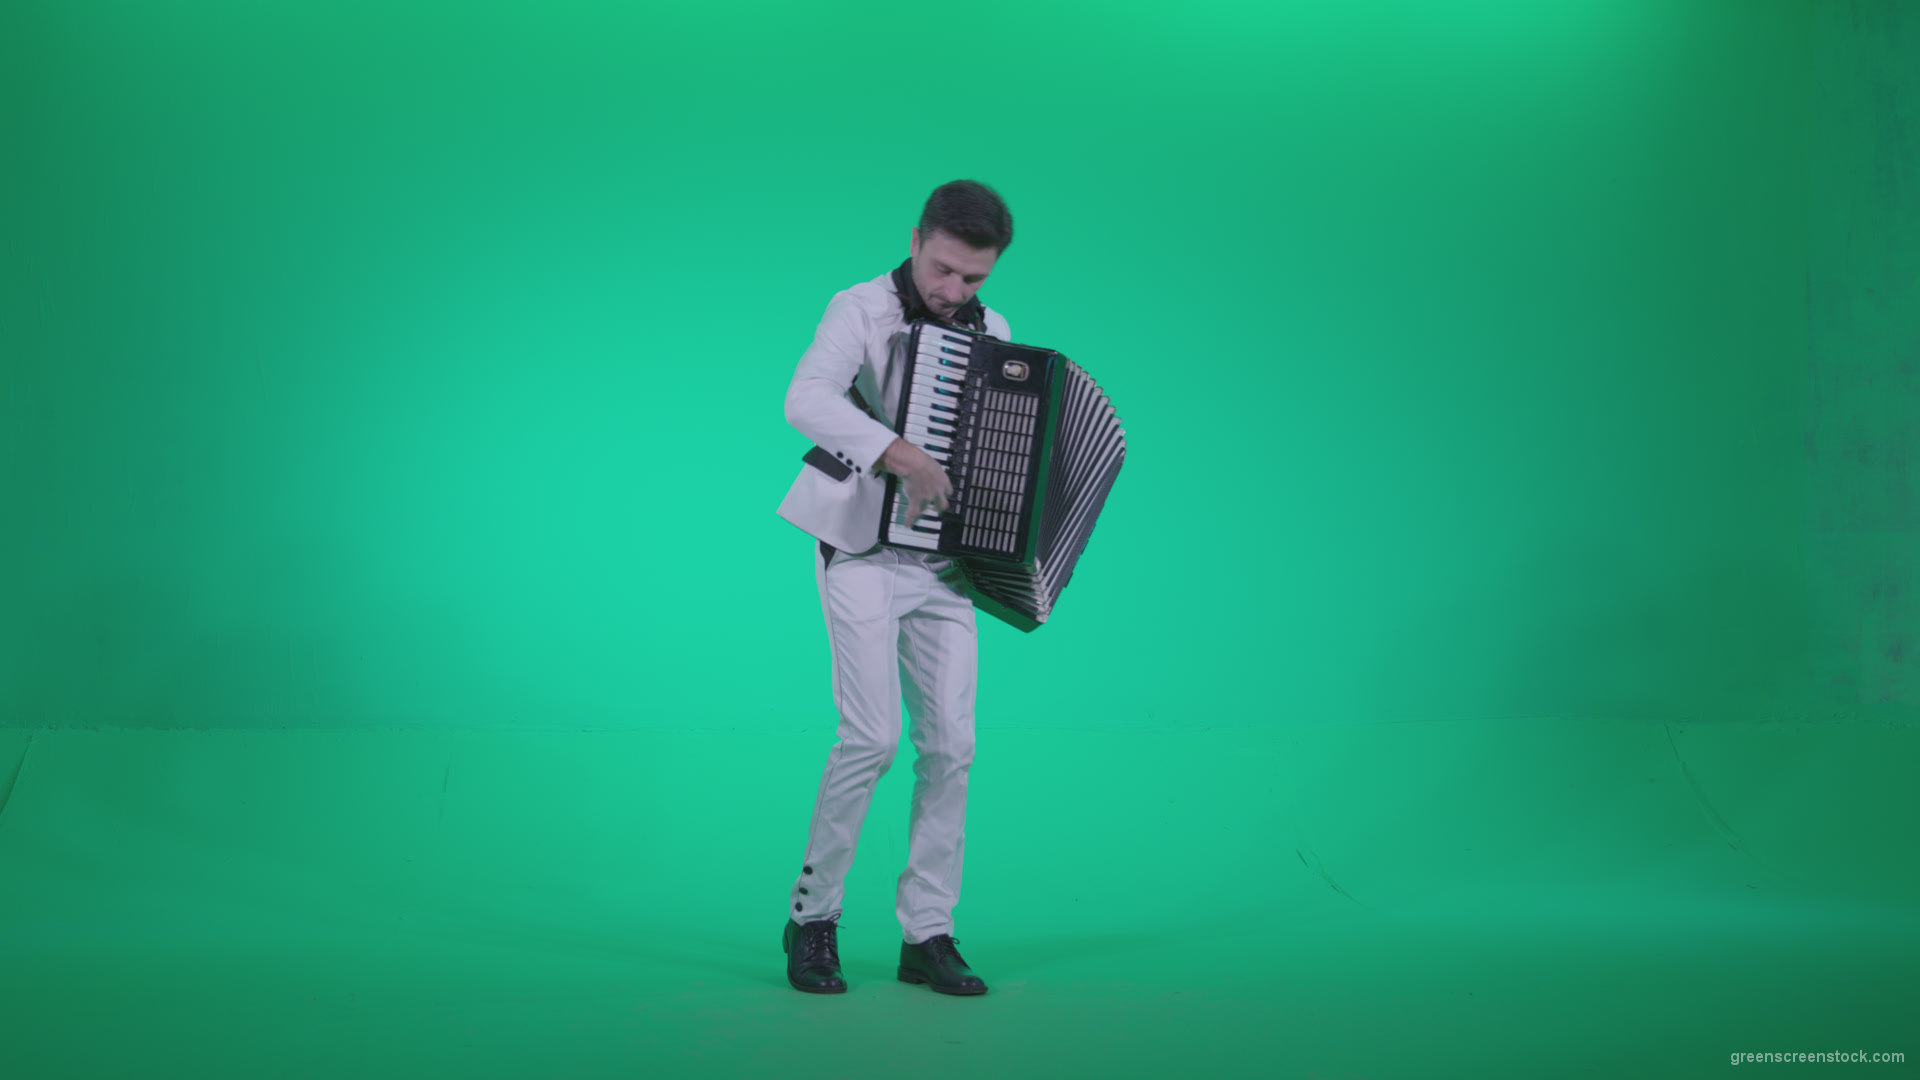 Black-Accordion-Virtuoso-performs-ba10-Green-Screen-Video-Footage_005 Green Screen Stock